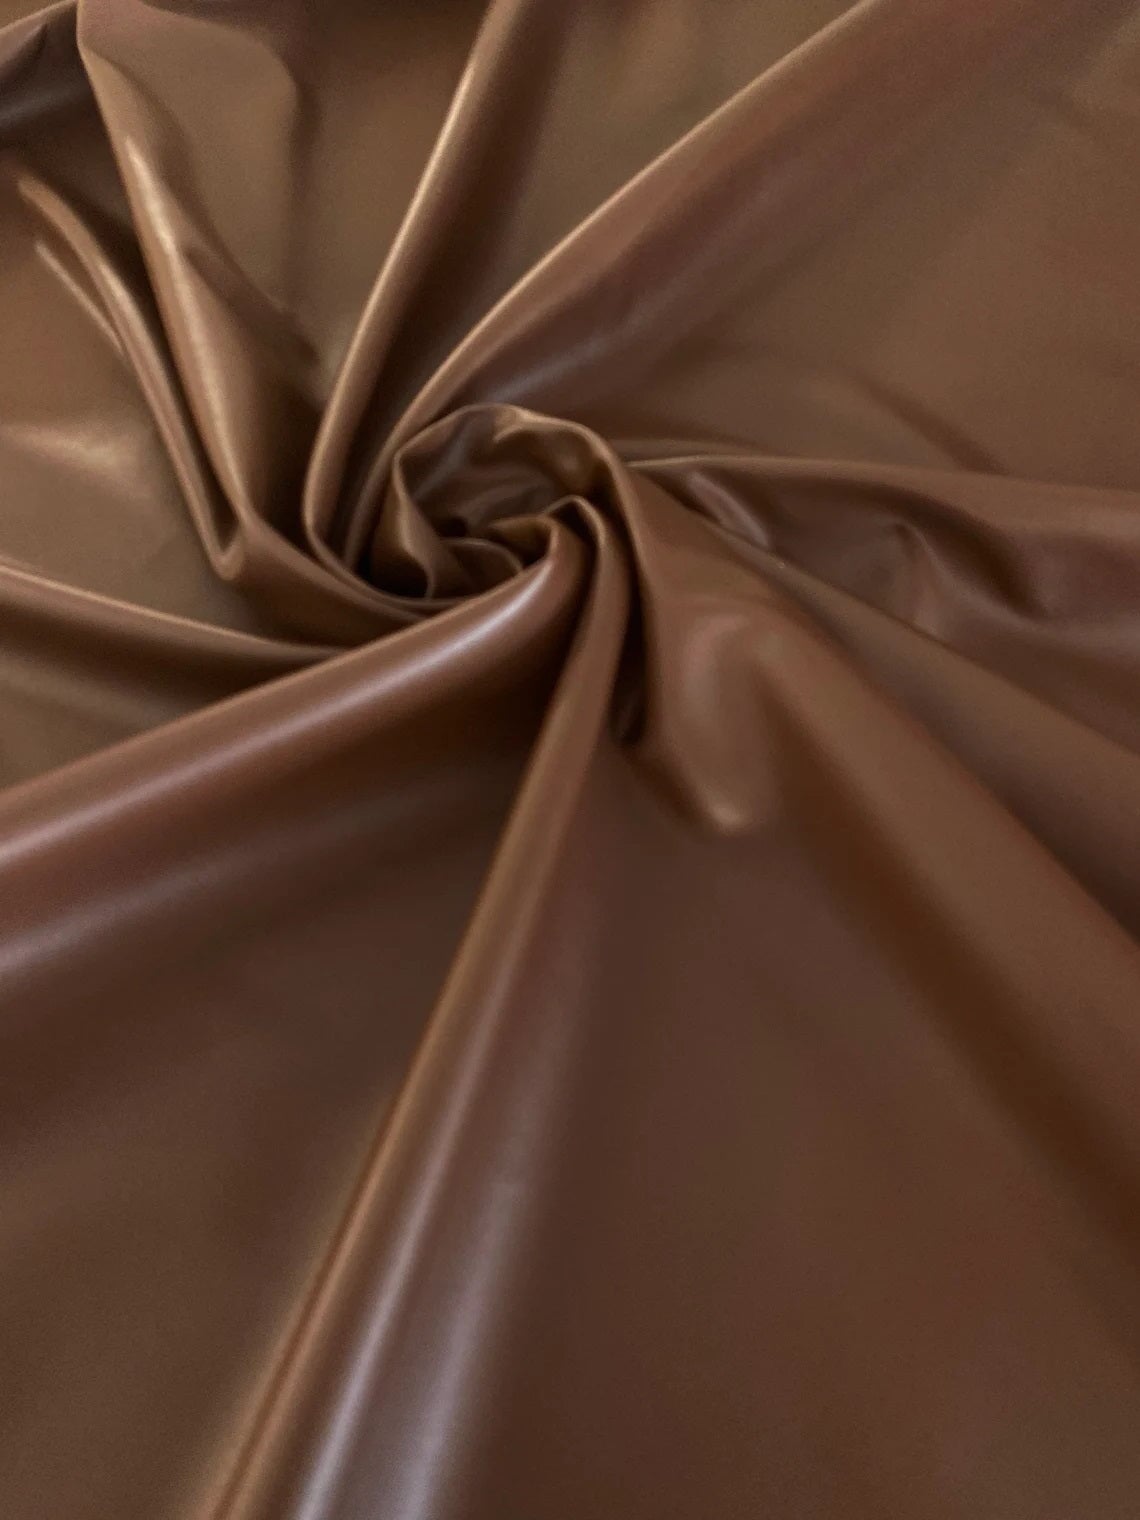 Shop now Chocolate Stretch Faux Leather by Yard- Kiki Textiles